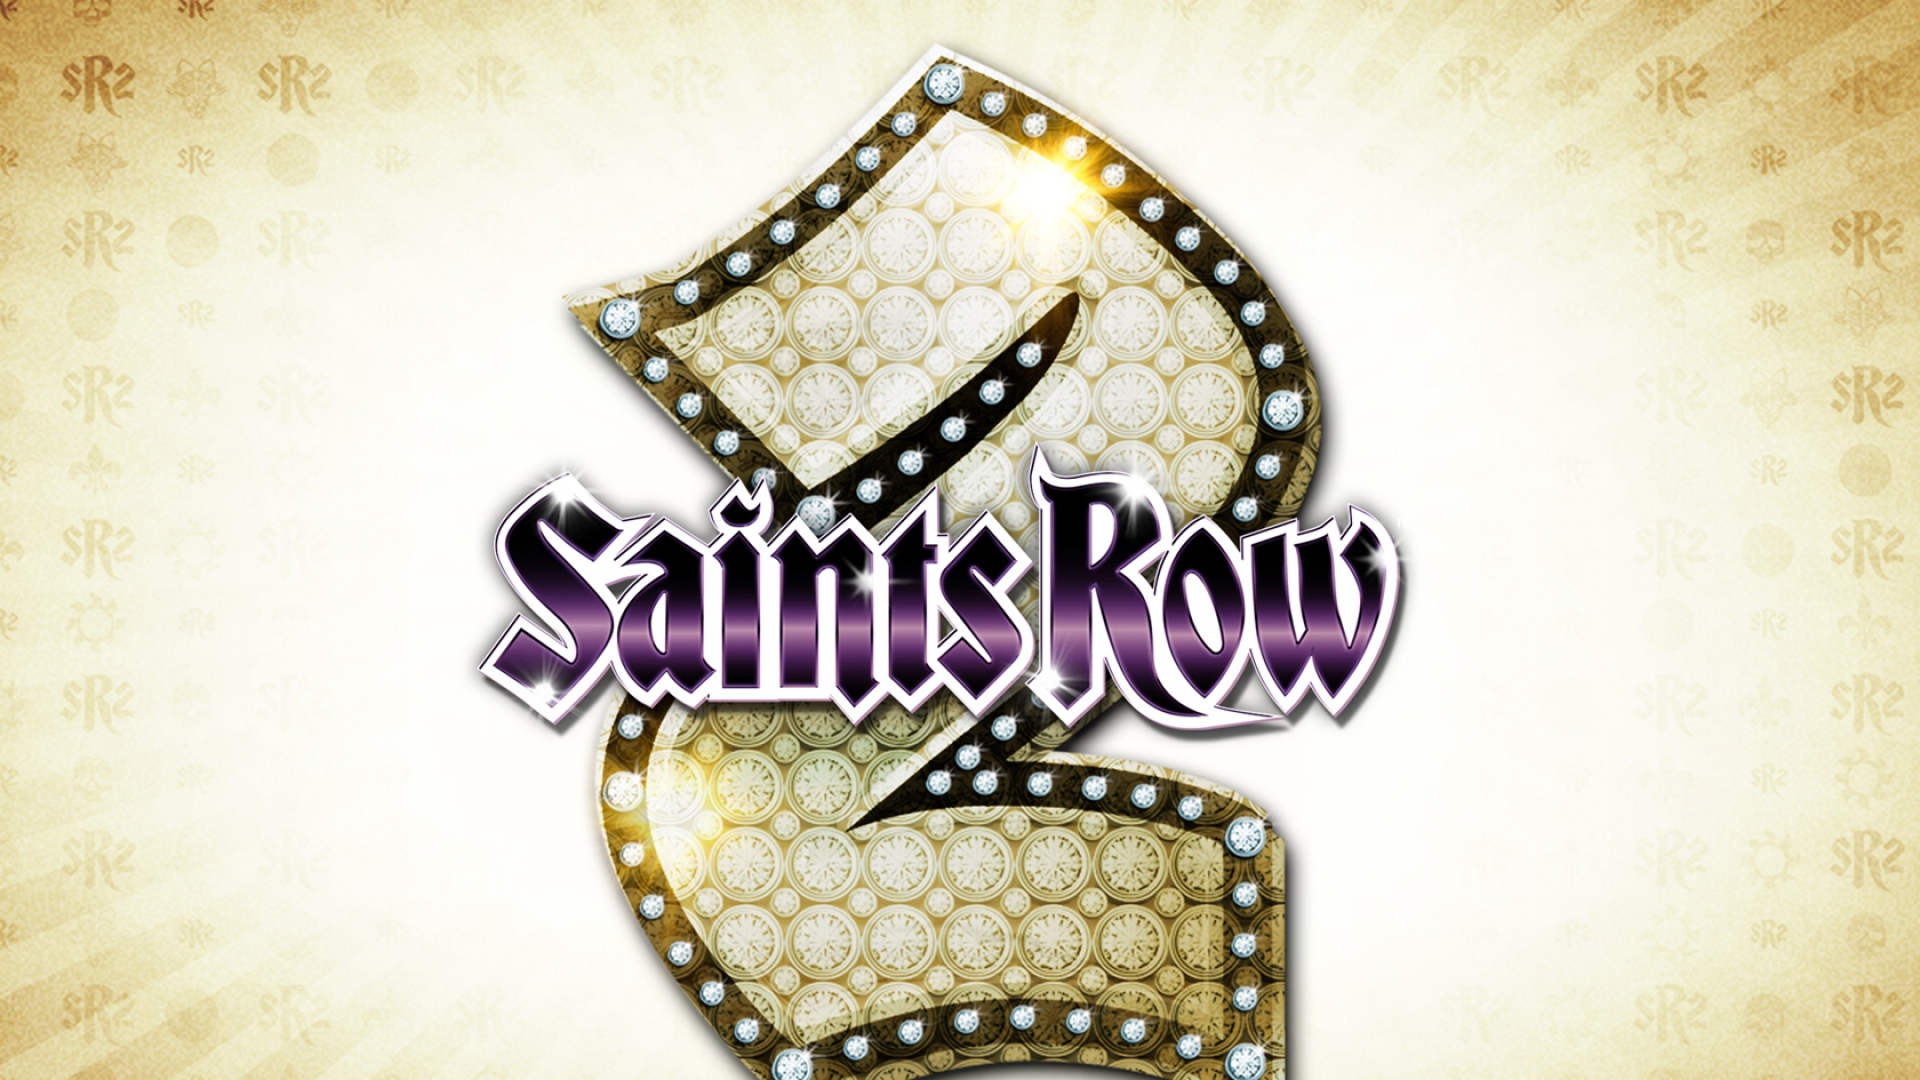 Download Wallpaper 1920x1080 Saints row 2, Emblem, Name, Game ...